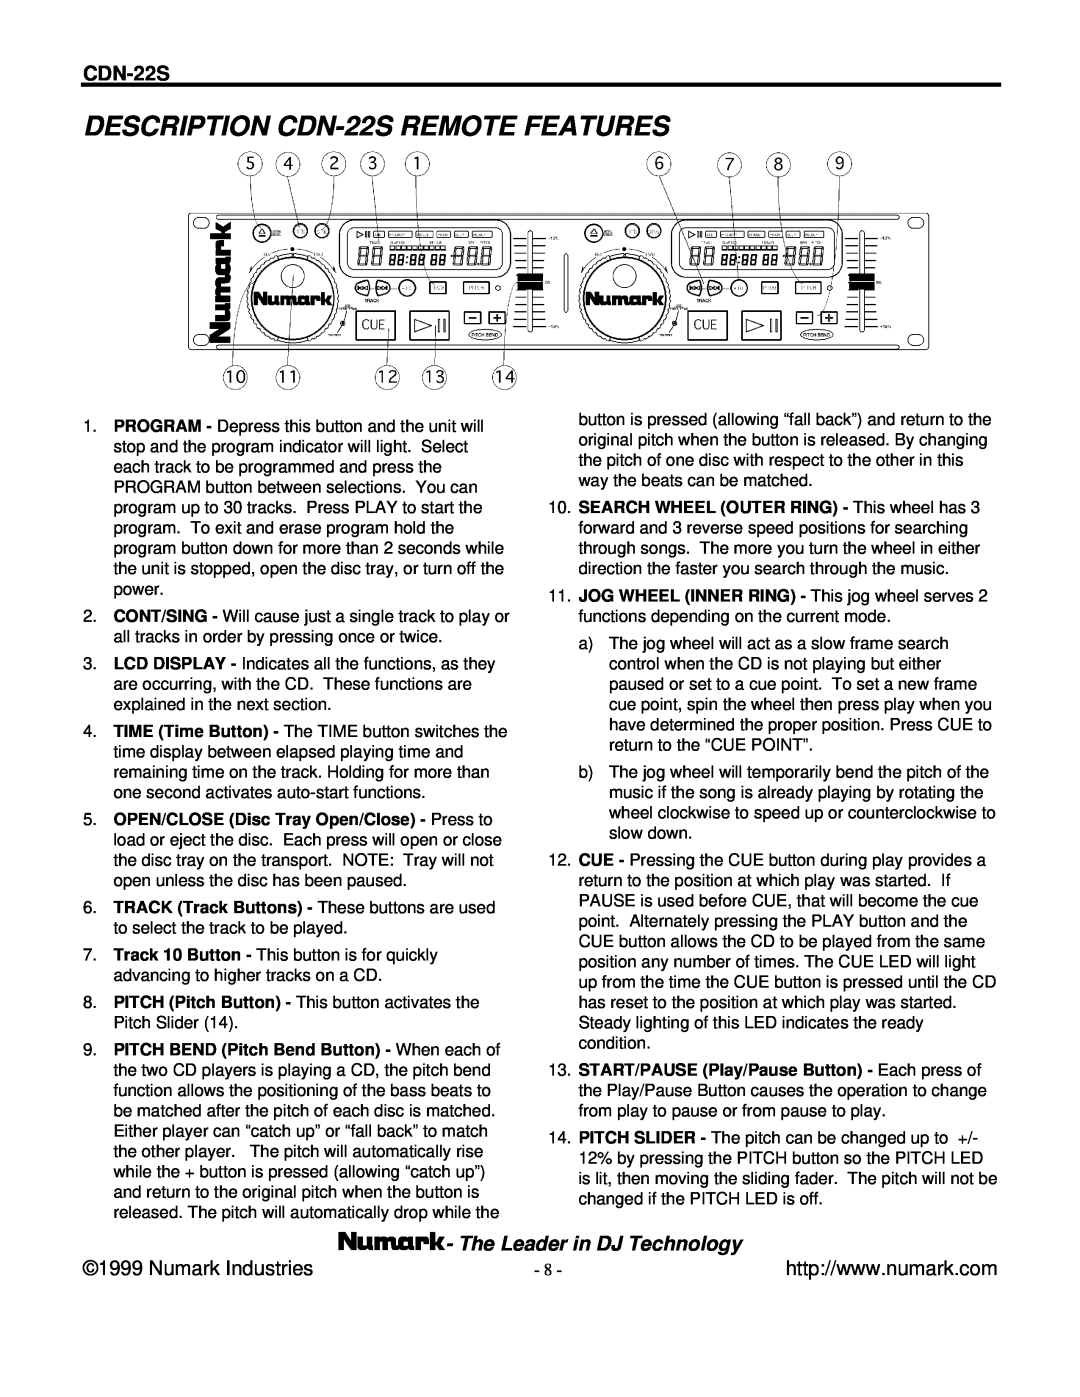 Numark Industries manual DESCRIPTION CDN-22SREMOTE FEATURES, The Leader in DJ Technology 